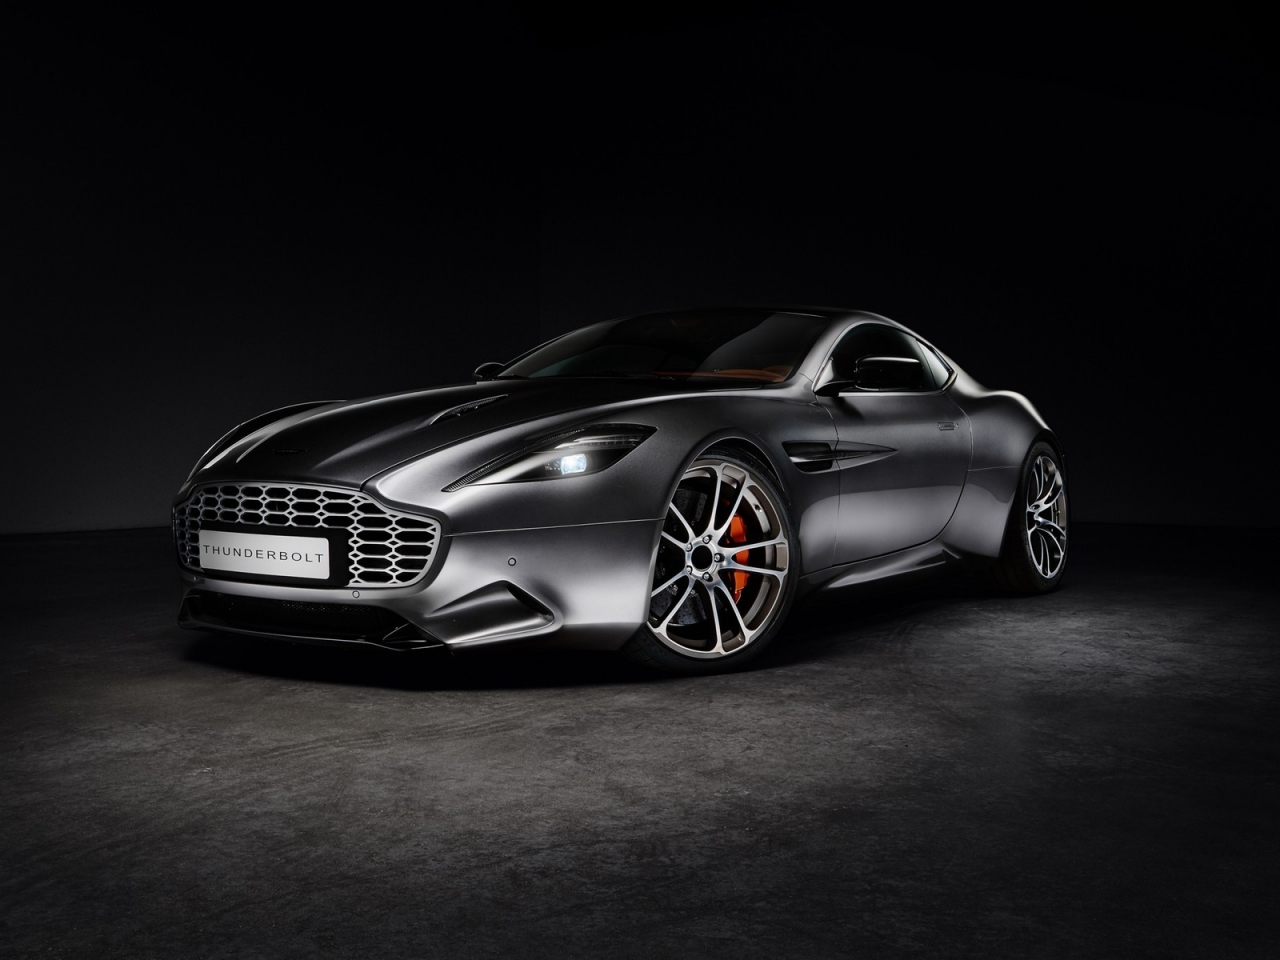 Aston Martin Thunderbolt for 1280 x 960 resolution